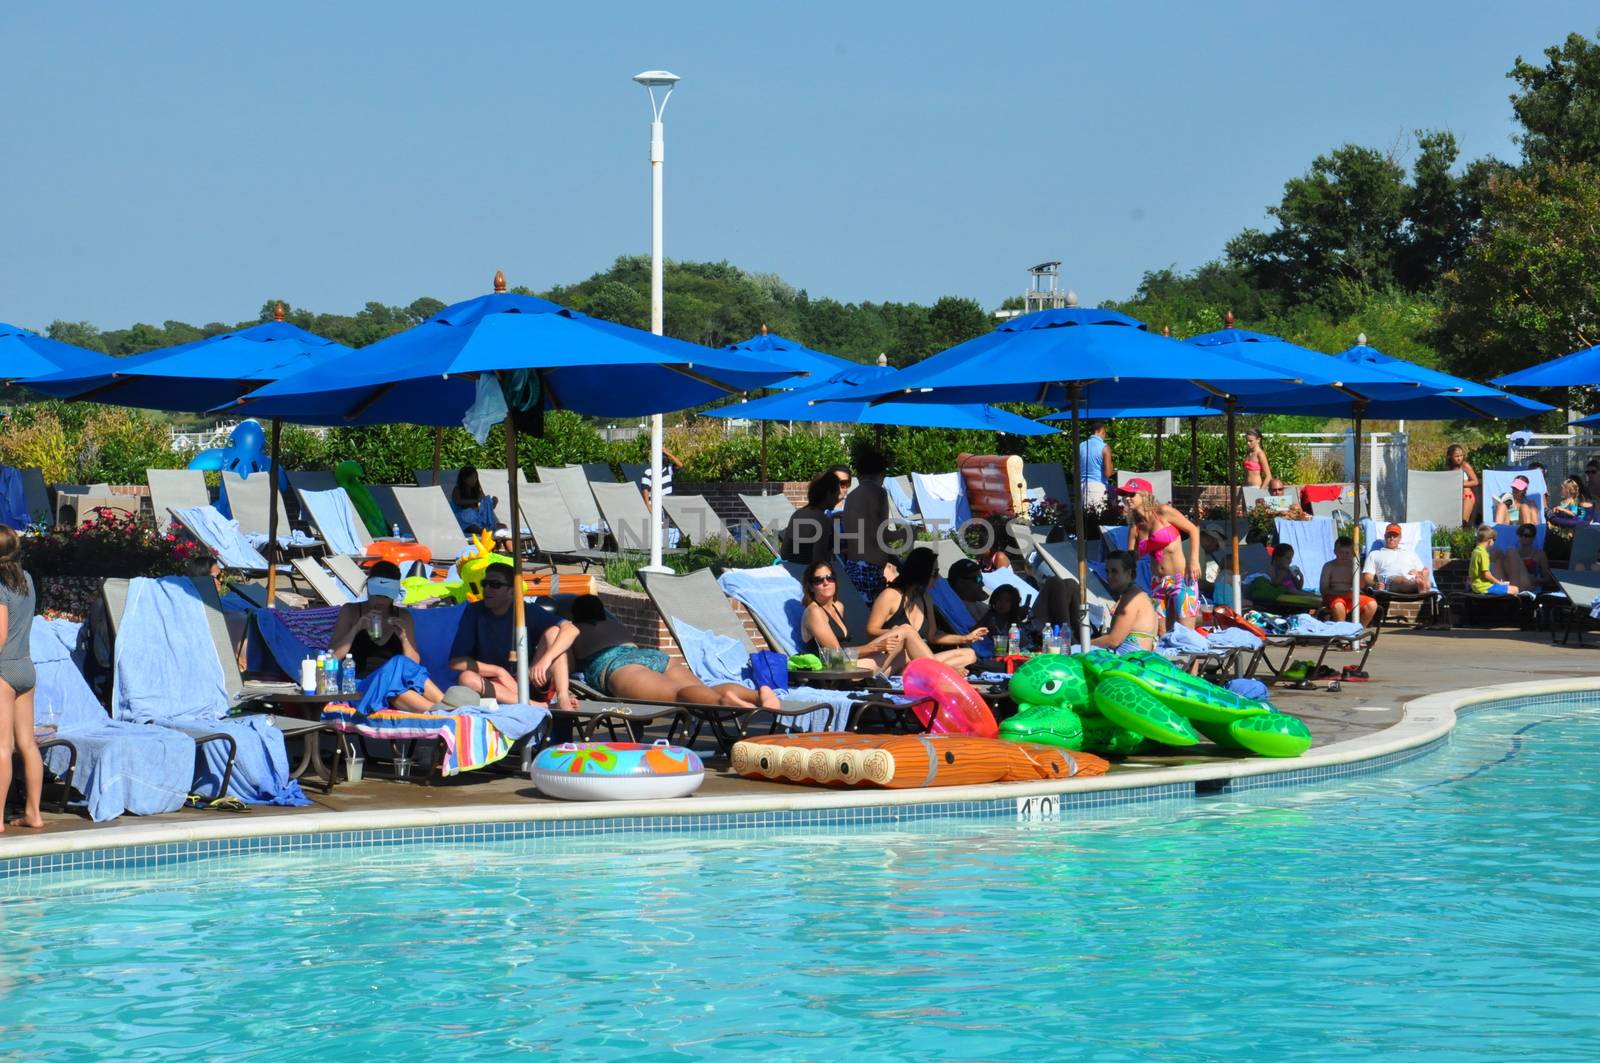 Poolside fun at the Hyatt Regency Chesapeake Bay resort in Cambridge, Maryland by sainaniritu